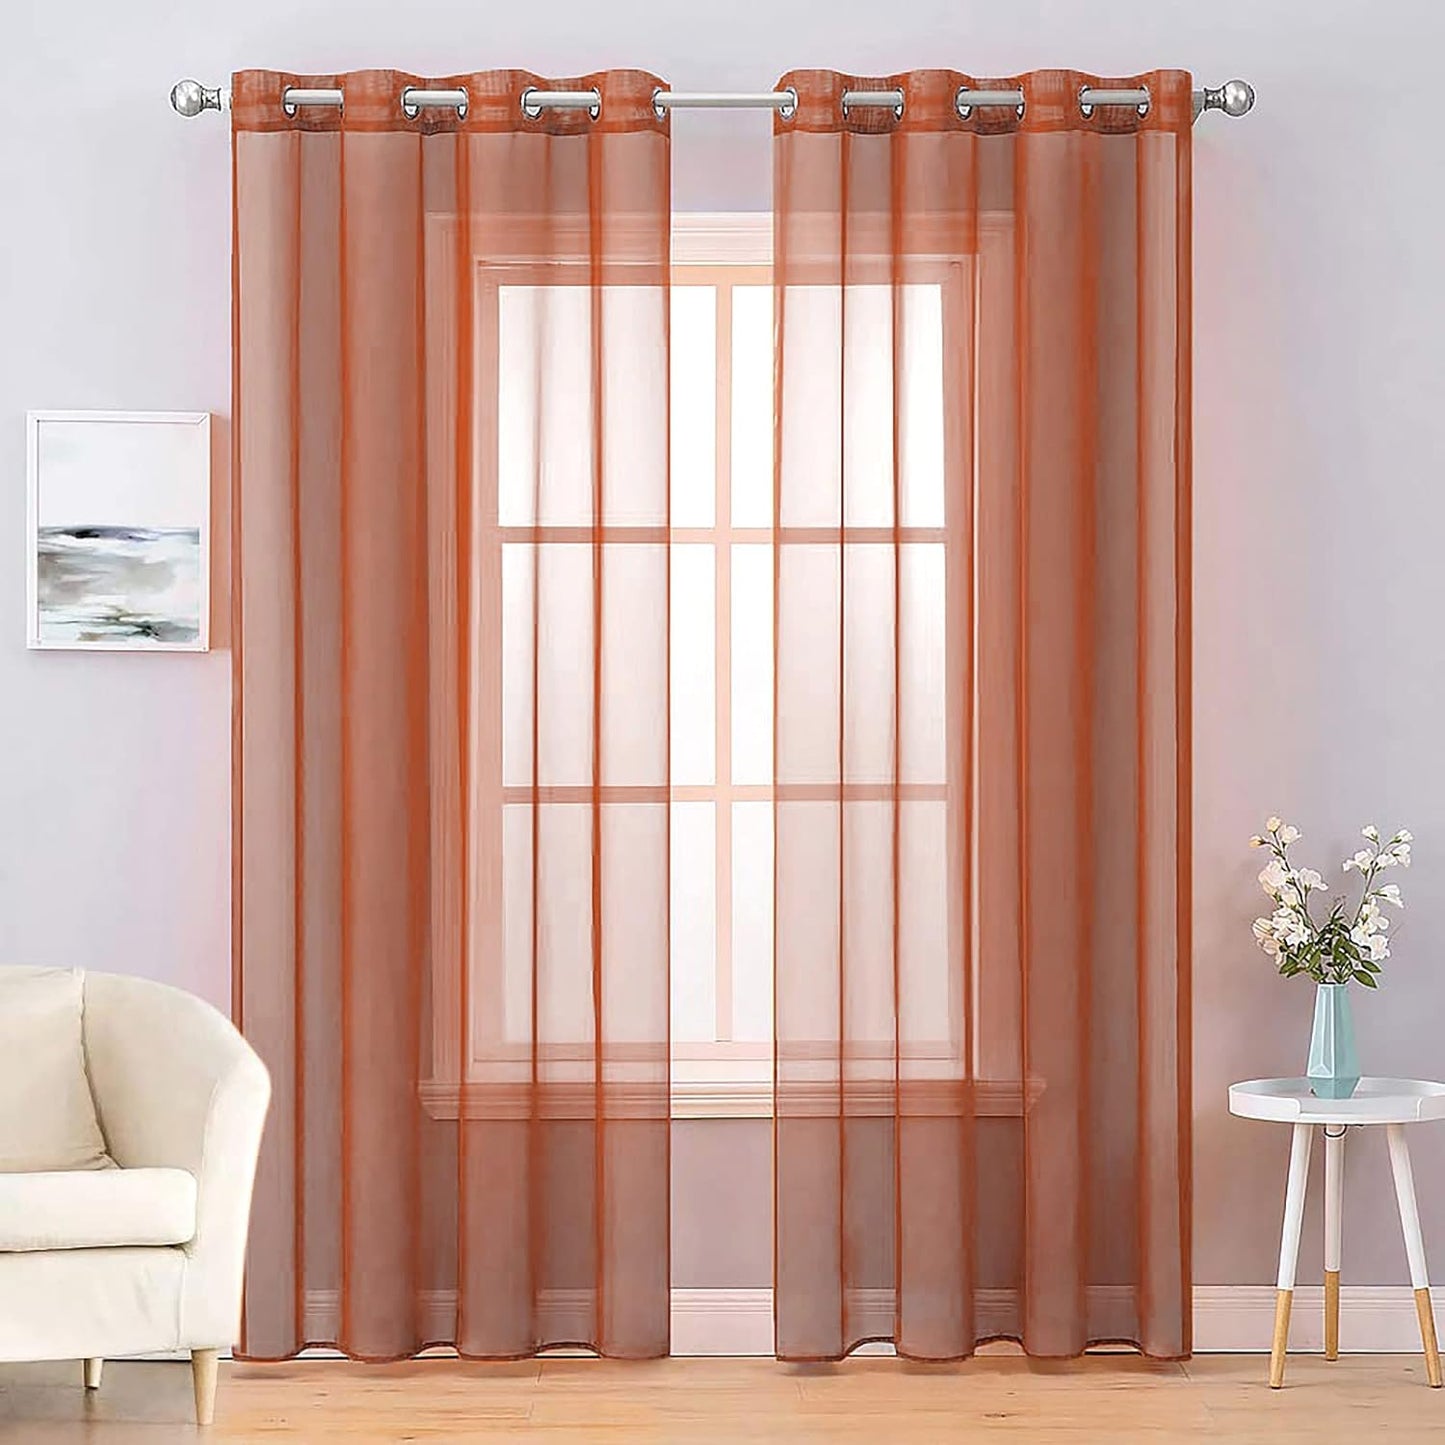 MIULEE 2 Panels Farmhouse Solid Color Beige Sheer Curtains Elegant Grommet Window Voile Panels/Drapes/Treatment for Bedroom Living Room (54X84 Inch)  MIULEE Burnt Orange 54''W X 84''L 